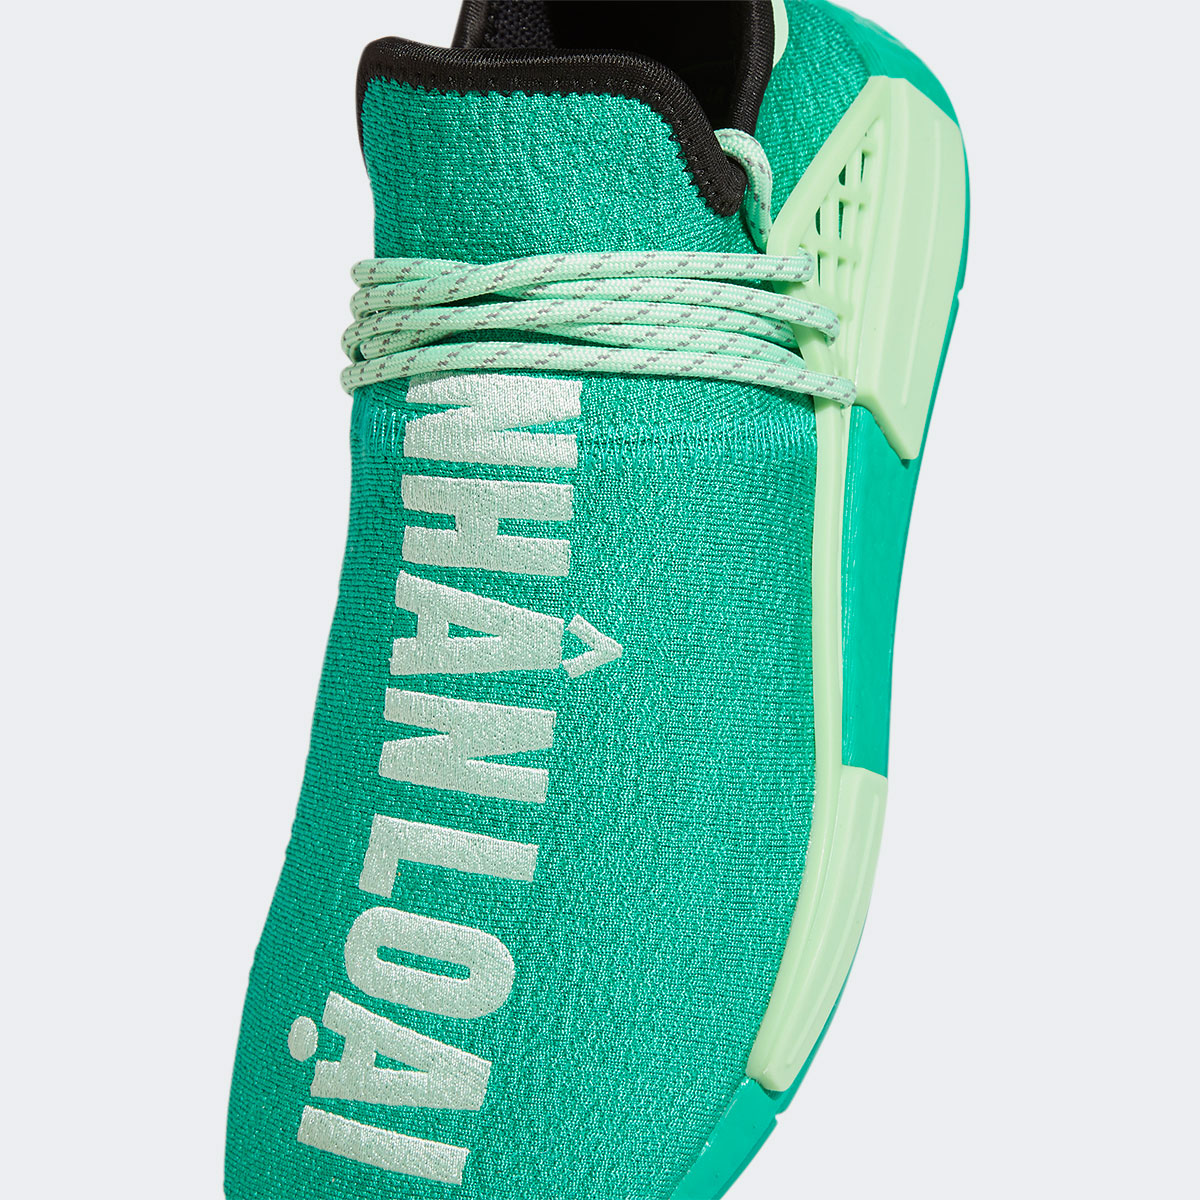 Pharrell x adidas HU NMD Mint Green: Images & Release Info